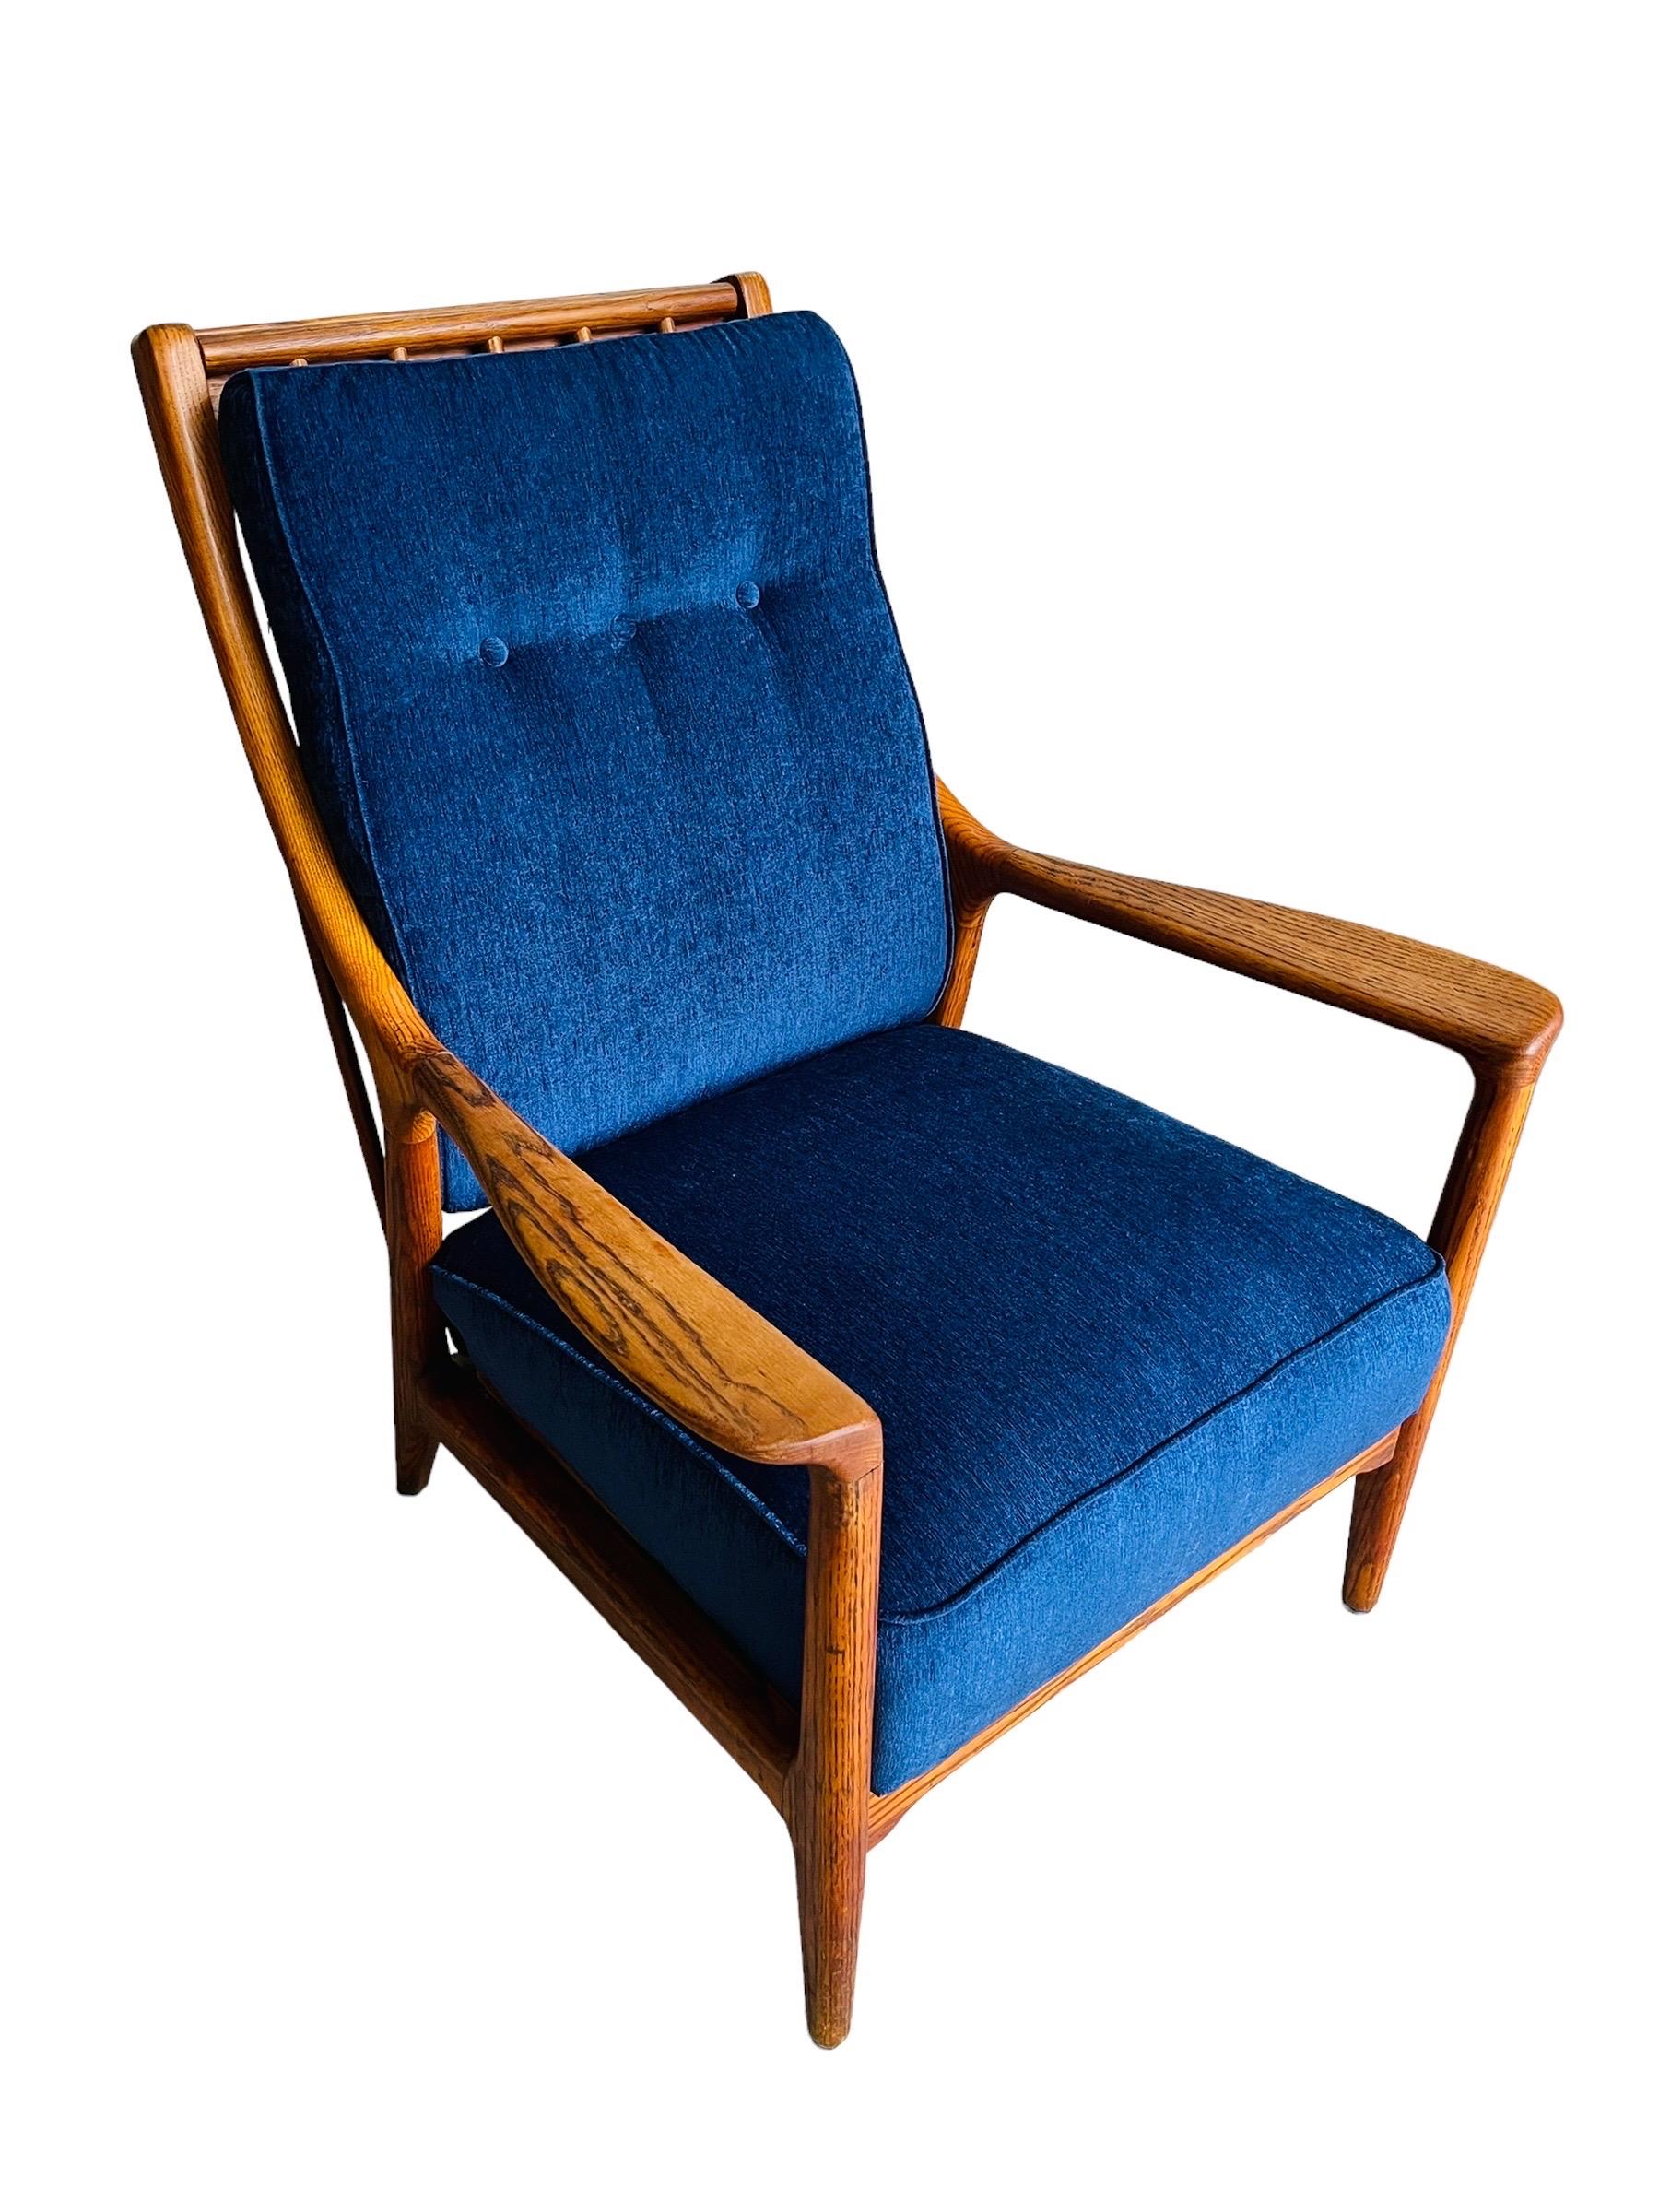 American Mid-Century Modern Oak Lounge Chair by Jack Van Der Molen